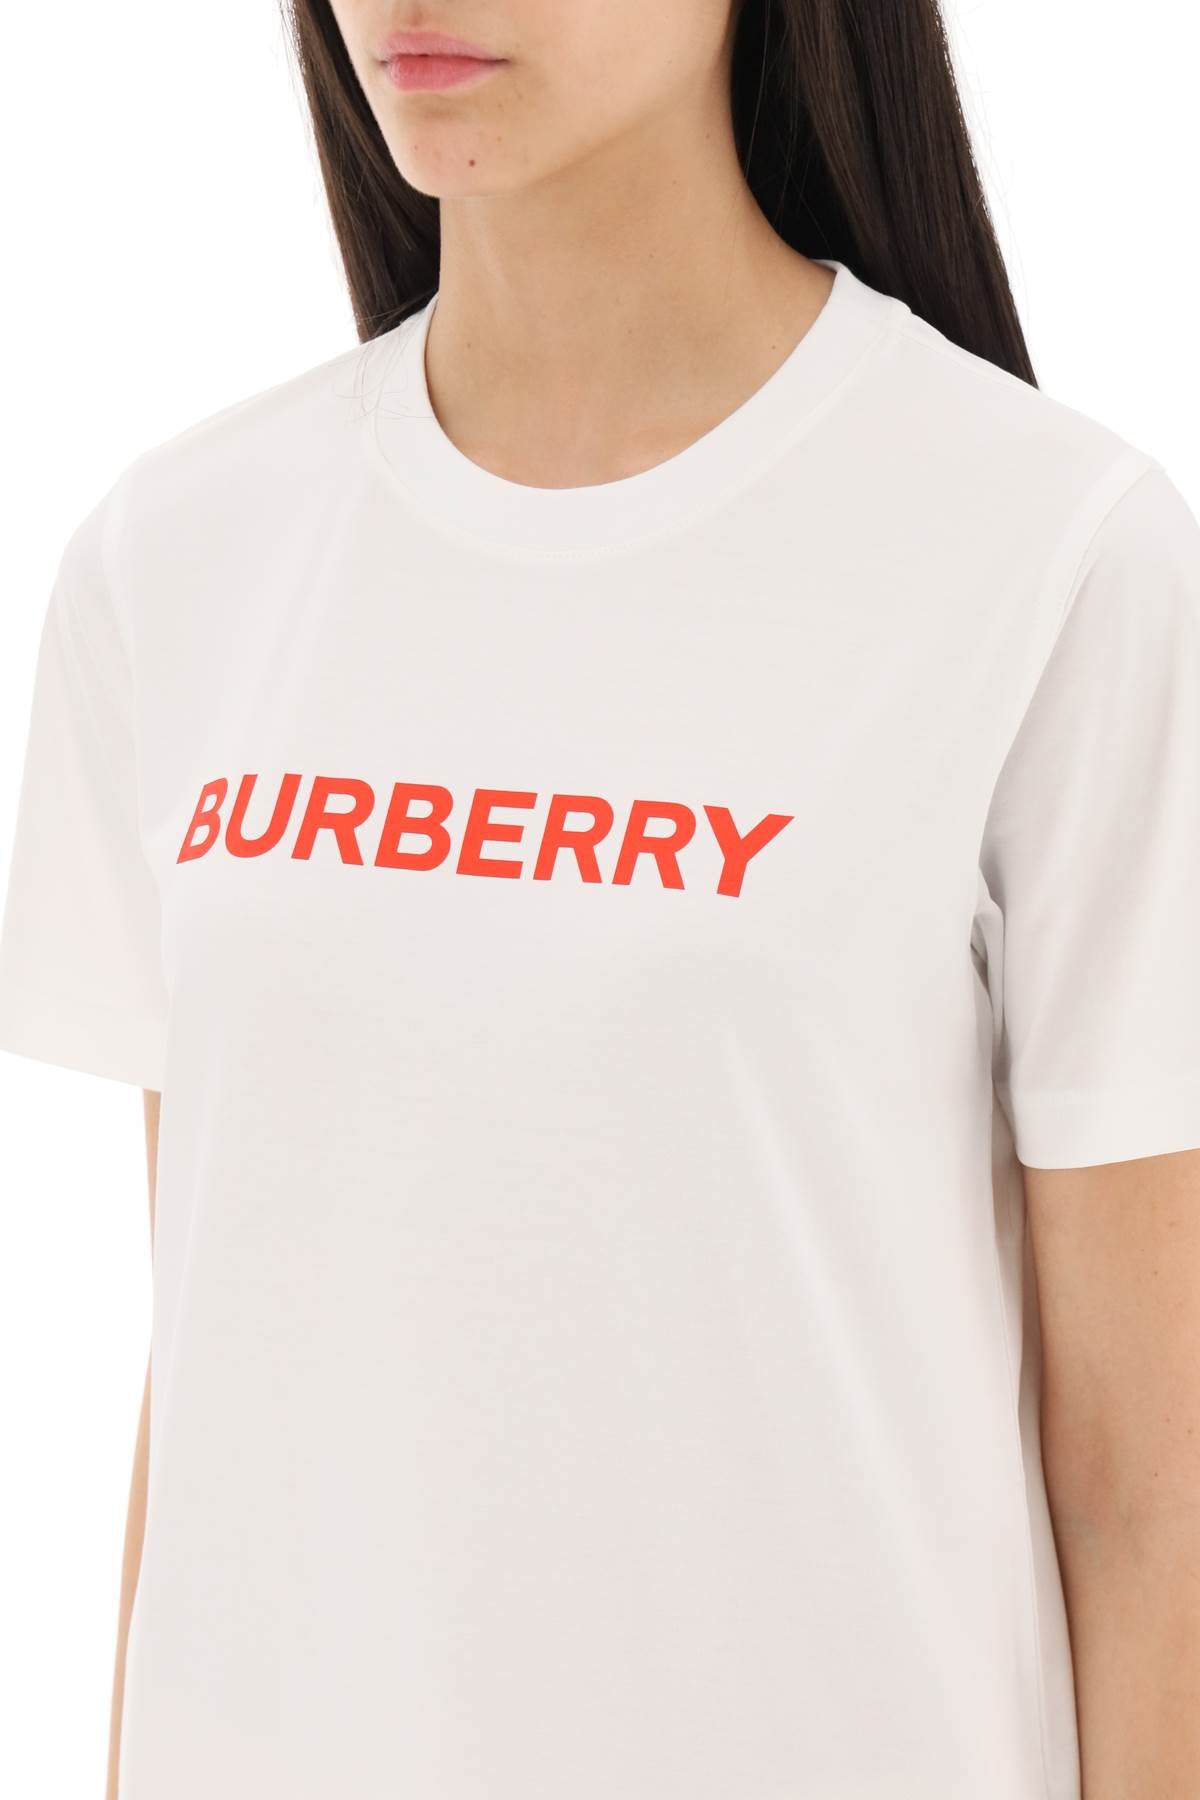 Burberry PRINT LOGO T-SHIRT 8070973A1464